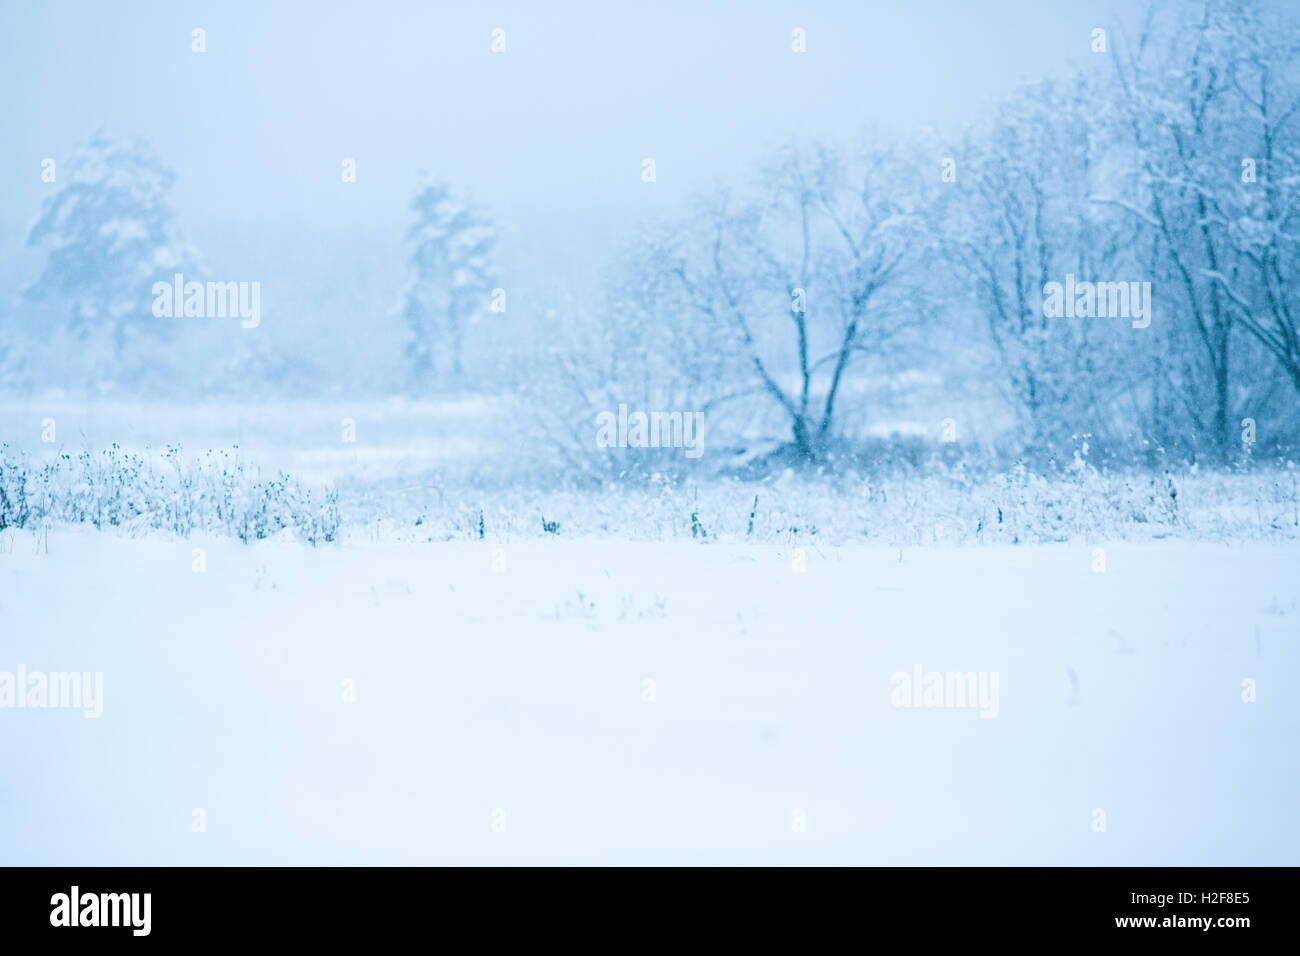 Winter snowy trees background Stock Photo